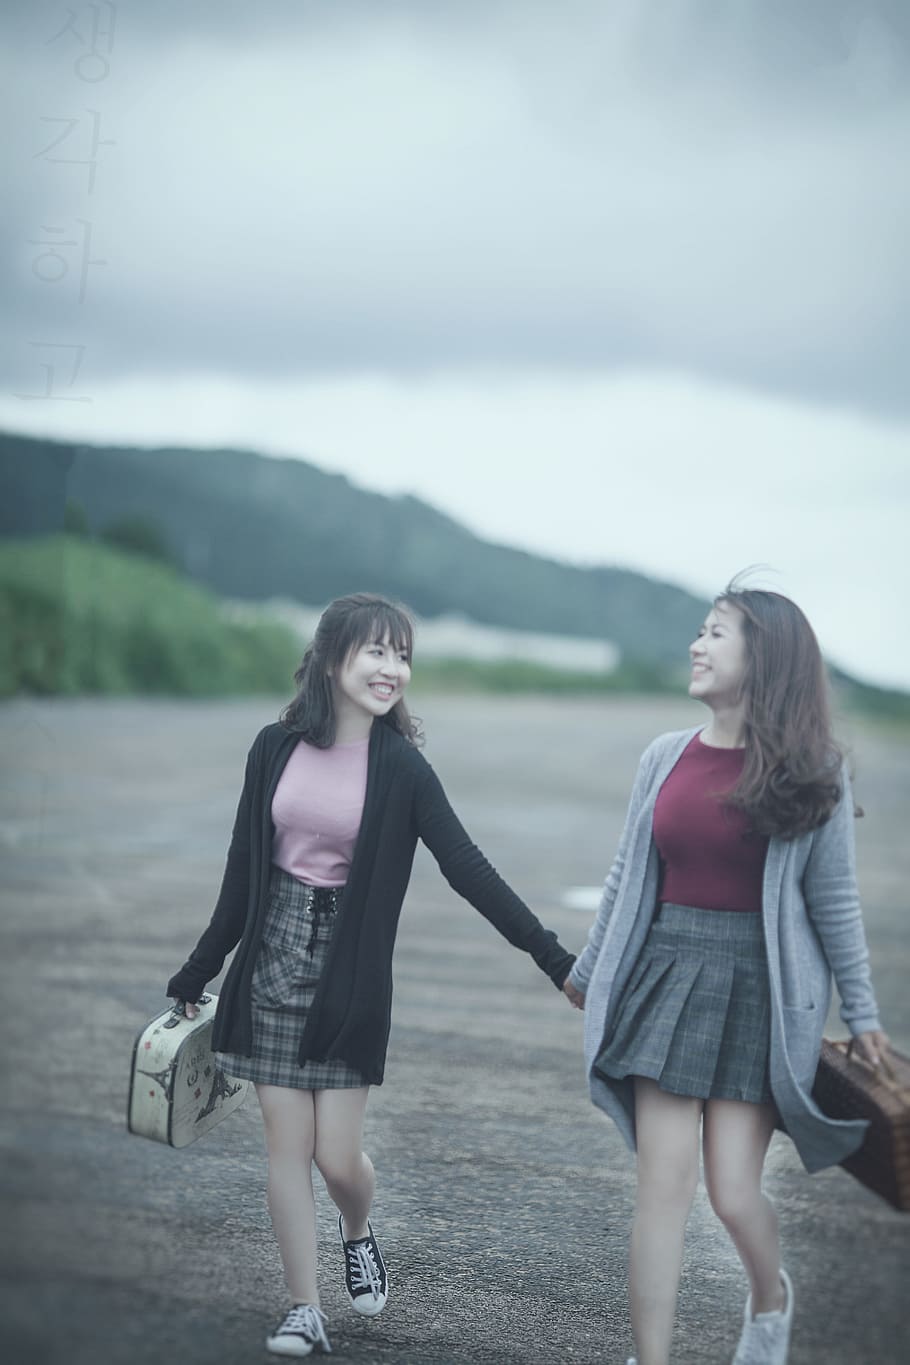 HD wallpaper: two women holding walking on road, laugh, beautiful